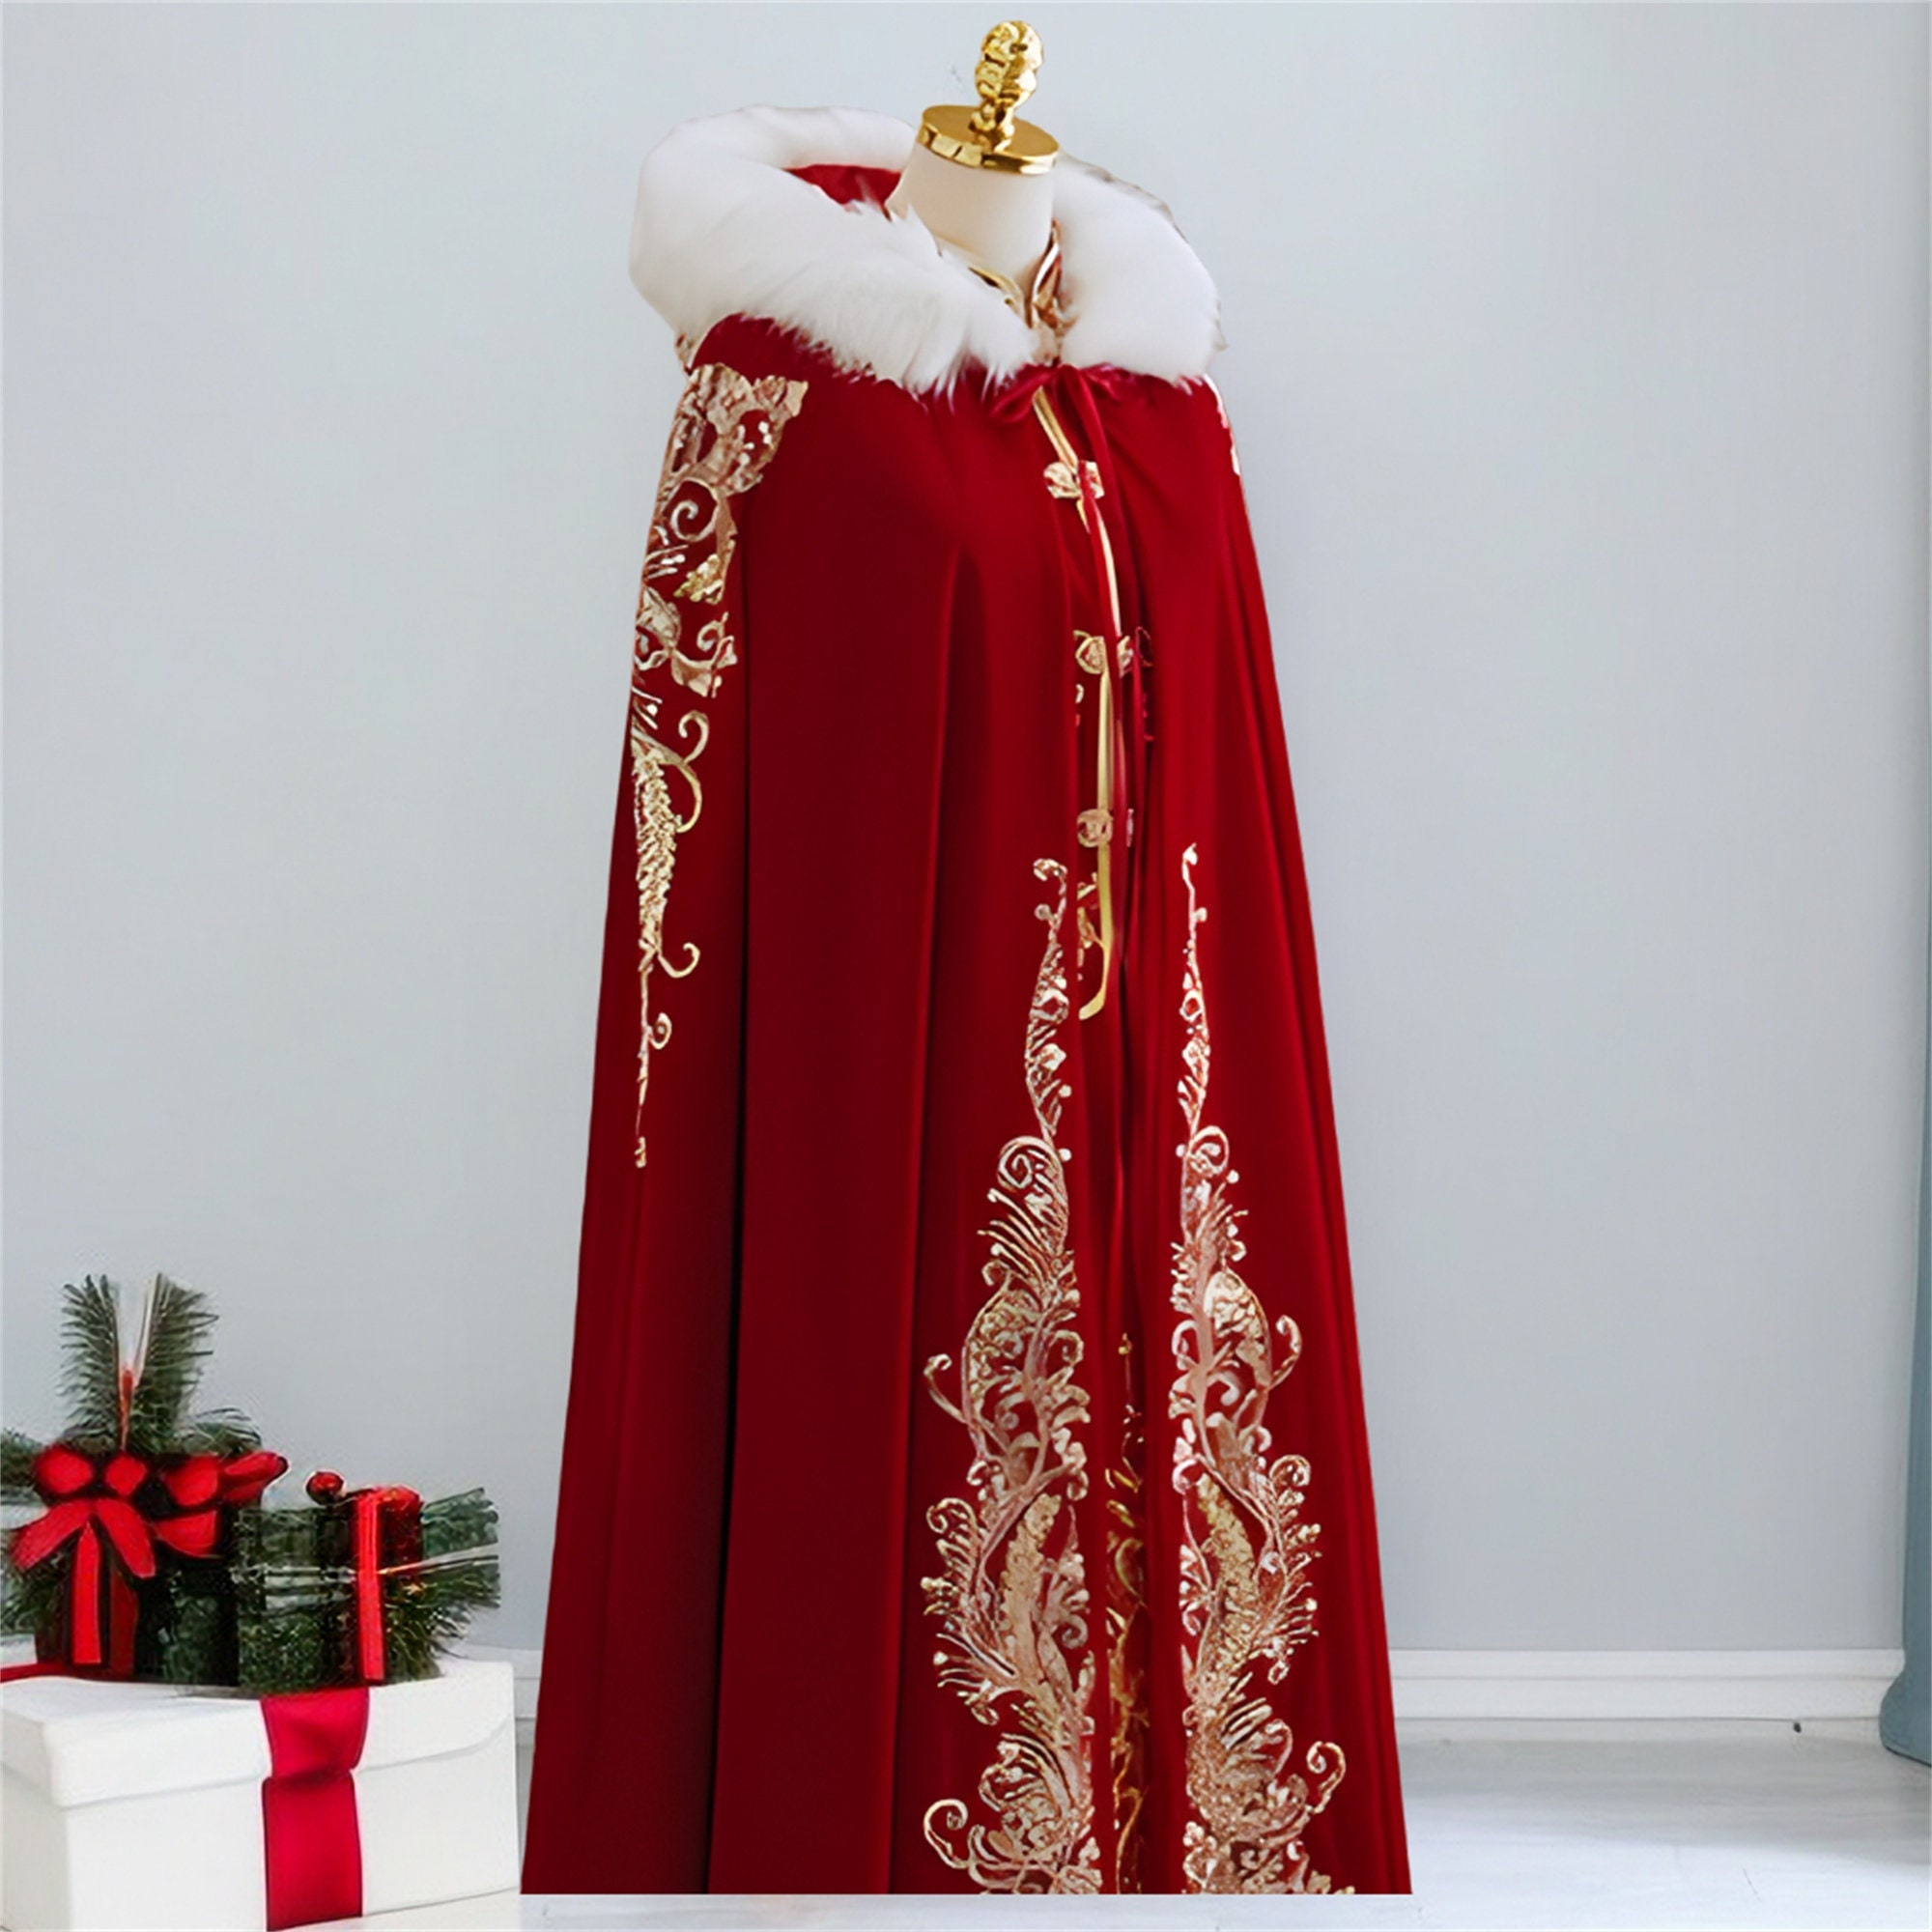 Women's 4Pc Plus Size Christmas Lingerie, Cape Sexy Mrs Claus Costume